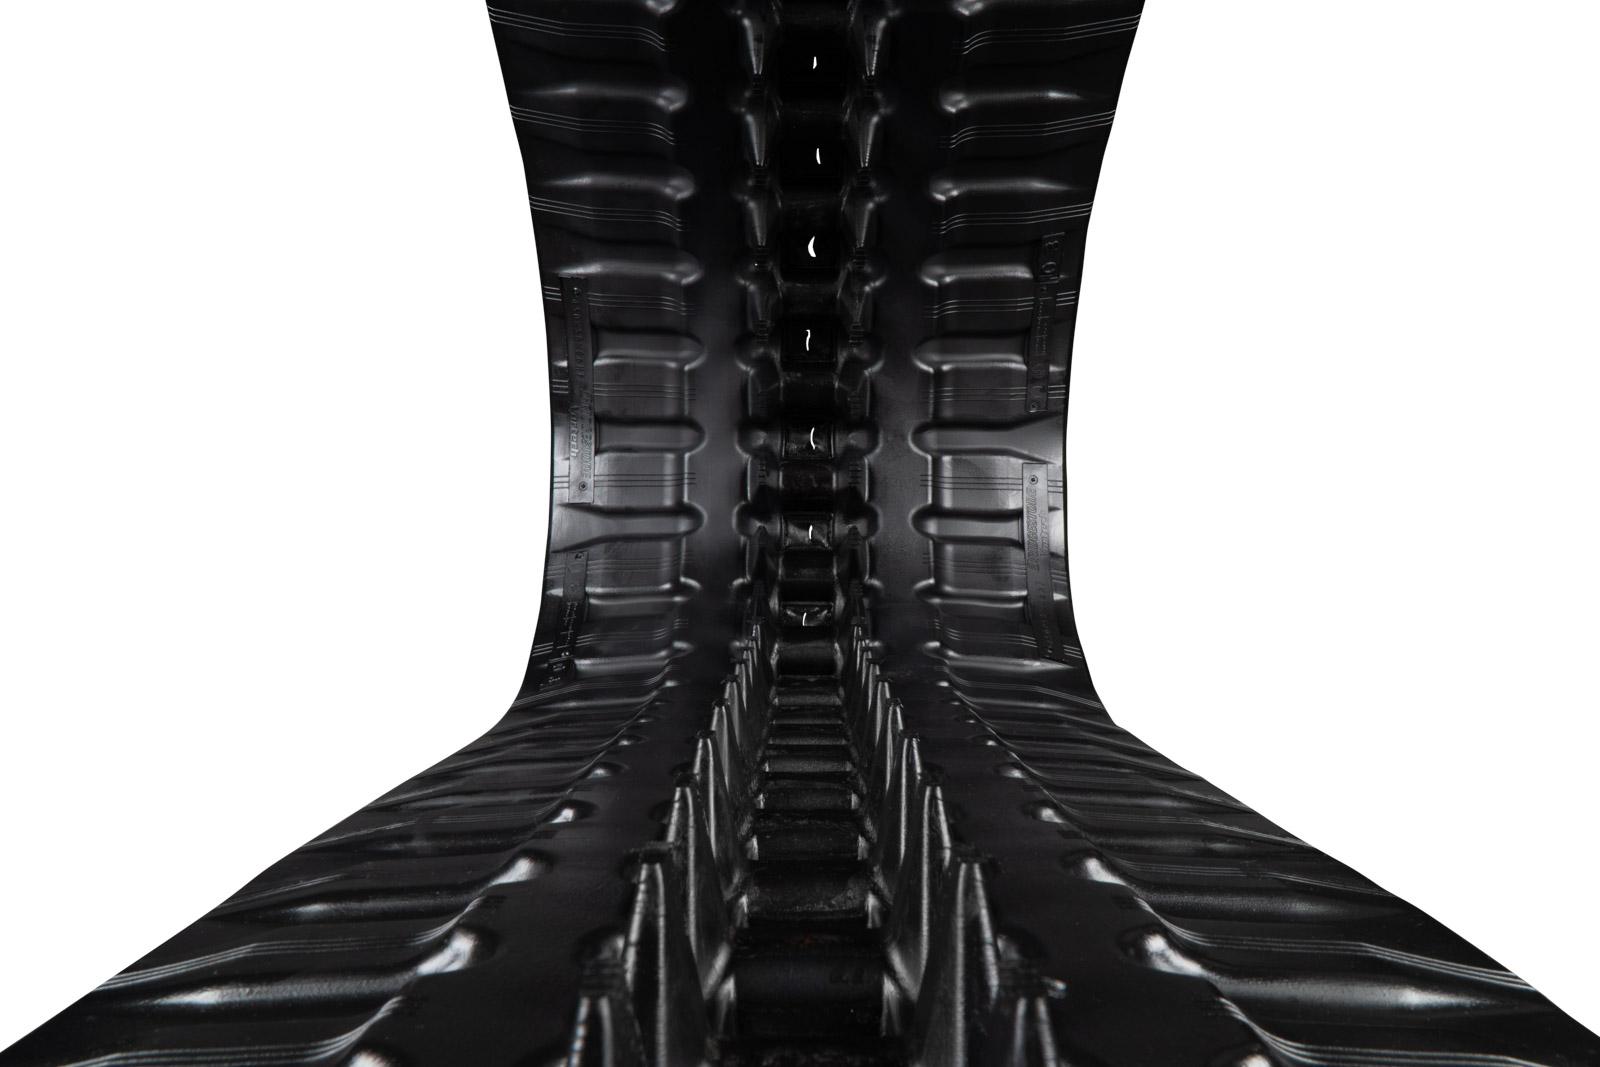 set of 2 18" bridgestone extreme duty vortech pattern rubber tracks (450x86x58)